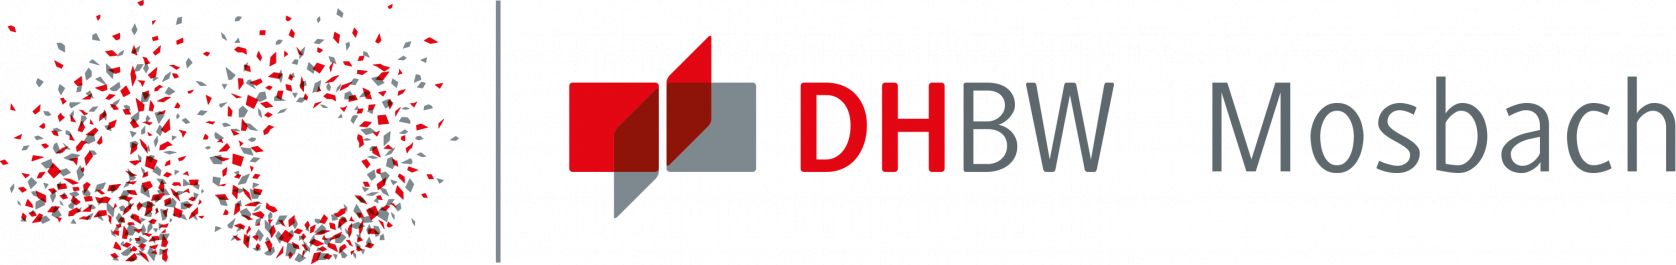 dhbw_mosbach_logo.png